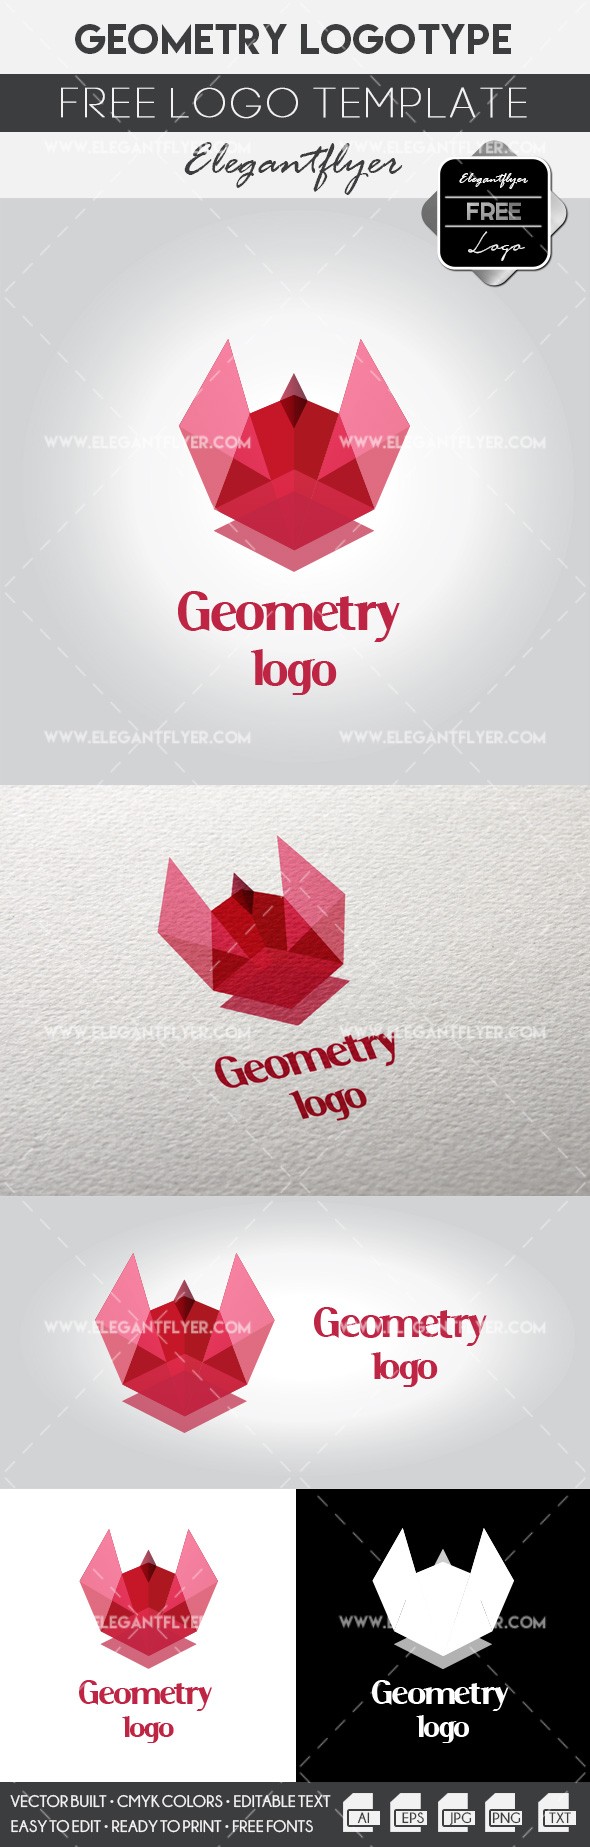 Logo geometrii by ElegantFlyer